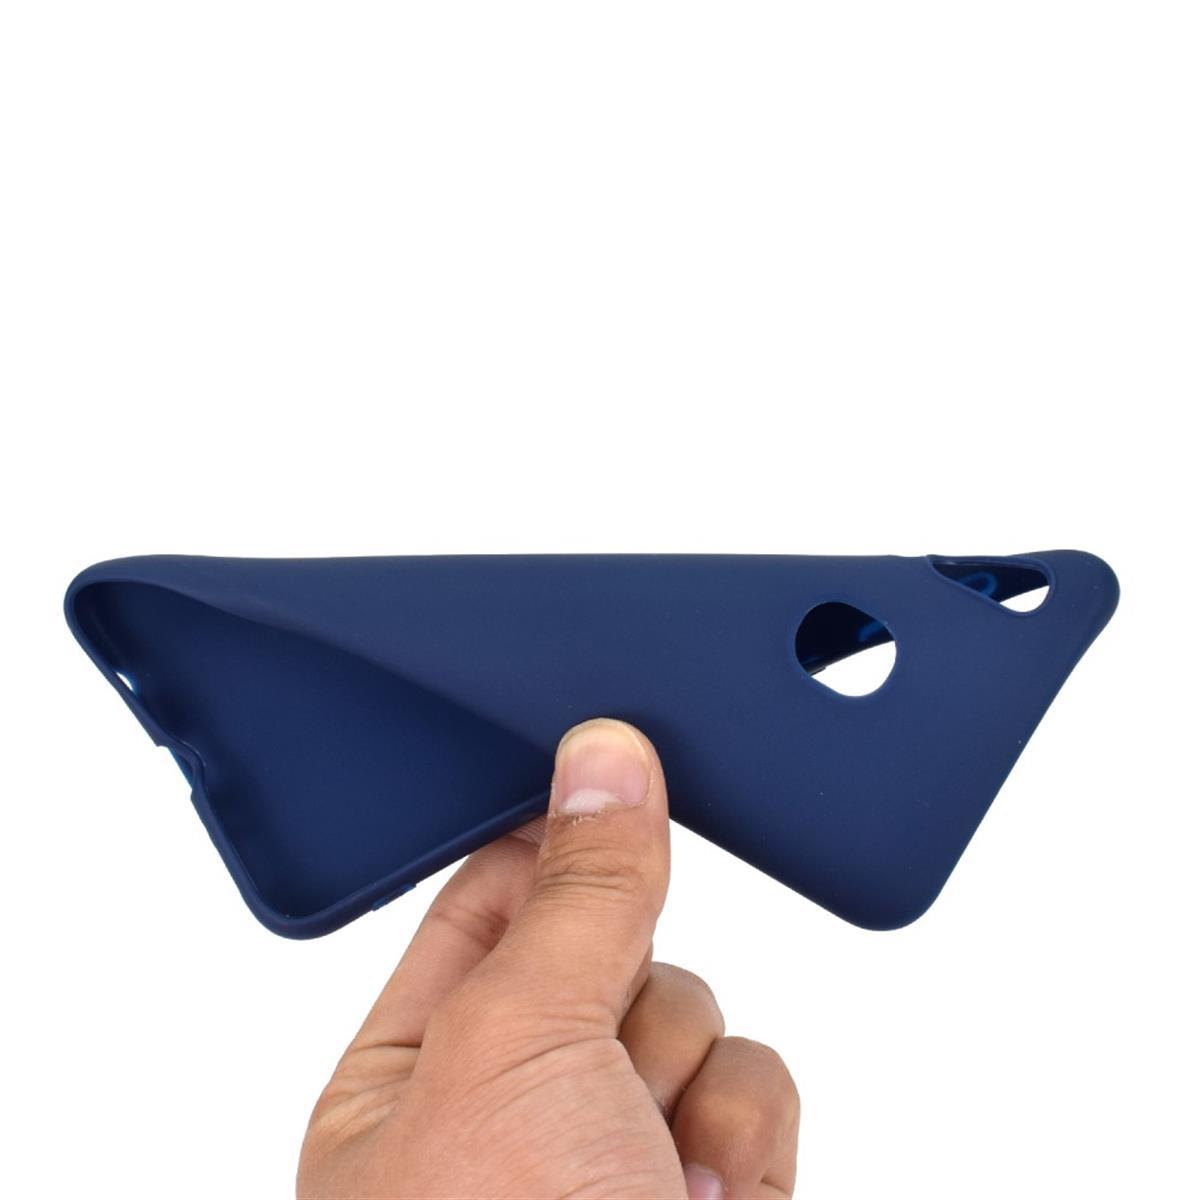 Hülle für Samsung Galaxy A30 Handyhülle Silikon Case Schutzhülle Etui matt Blau